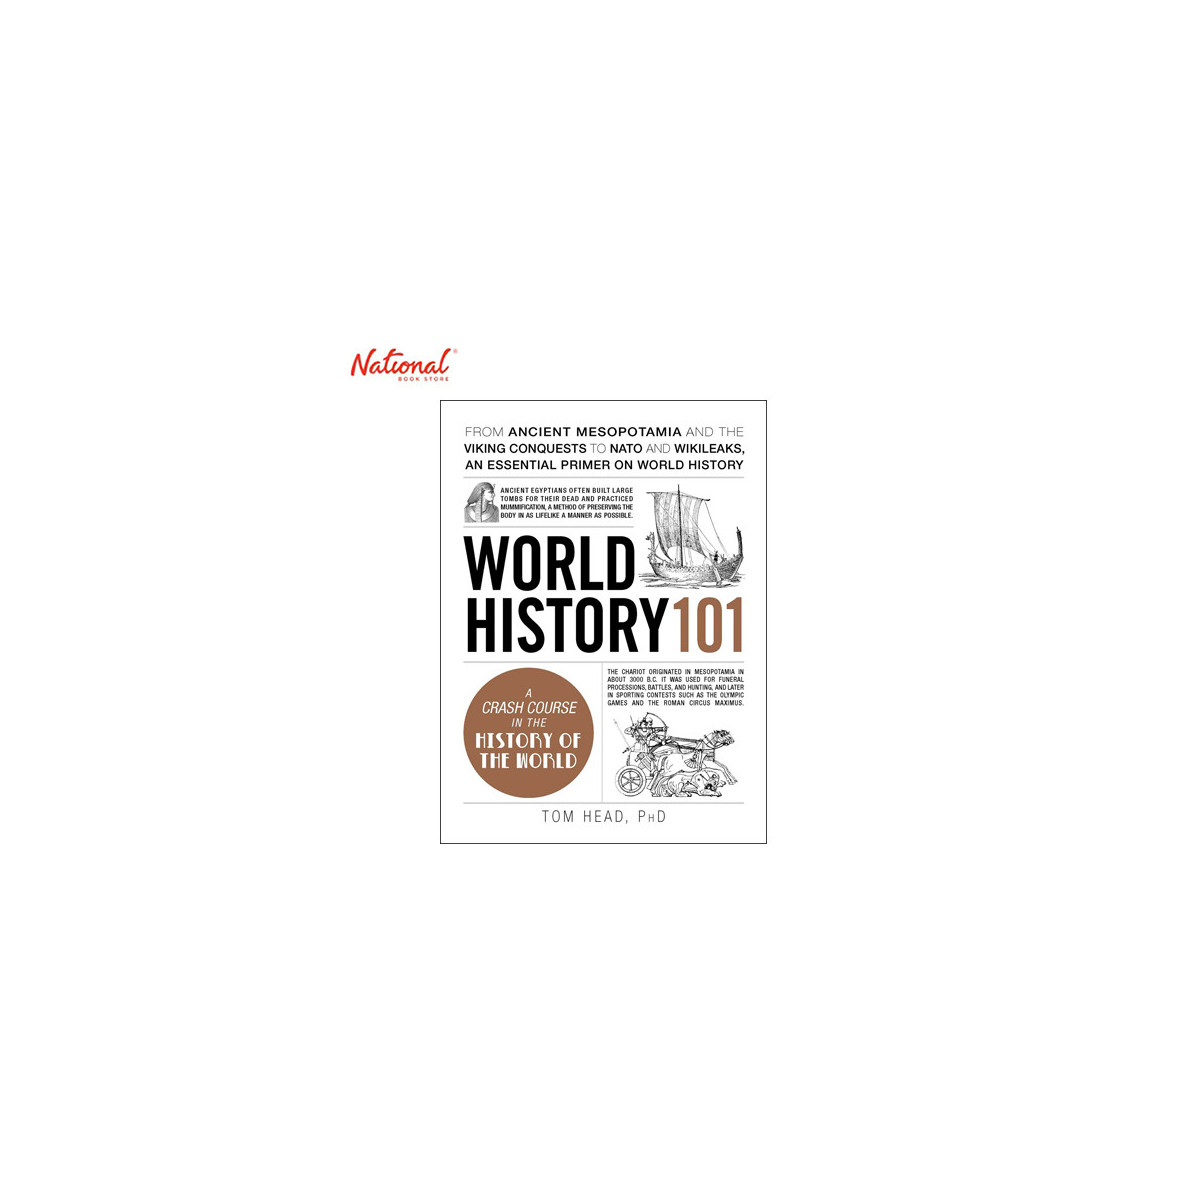 World History 101 Hardcover by Tom Head, PhD